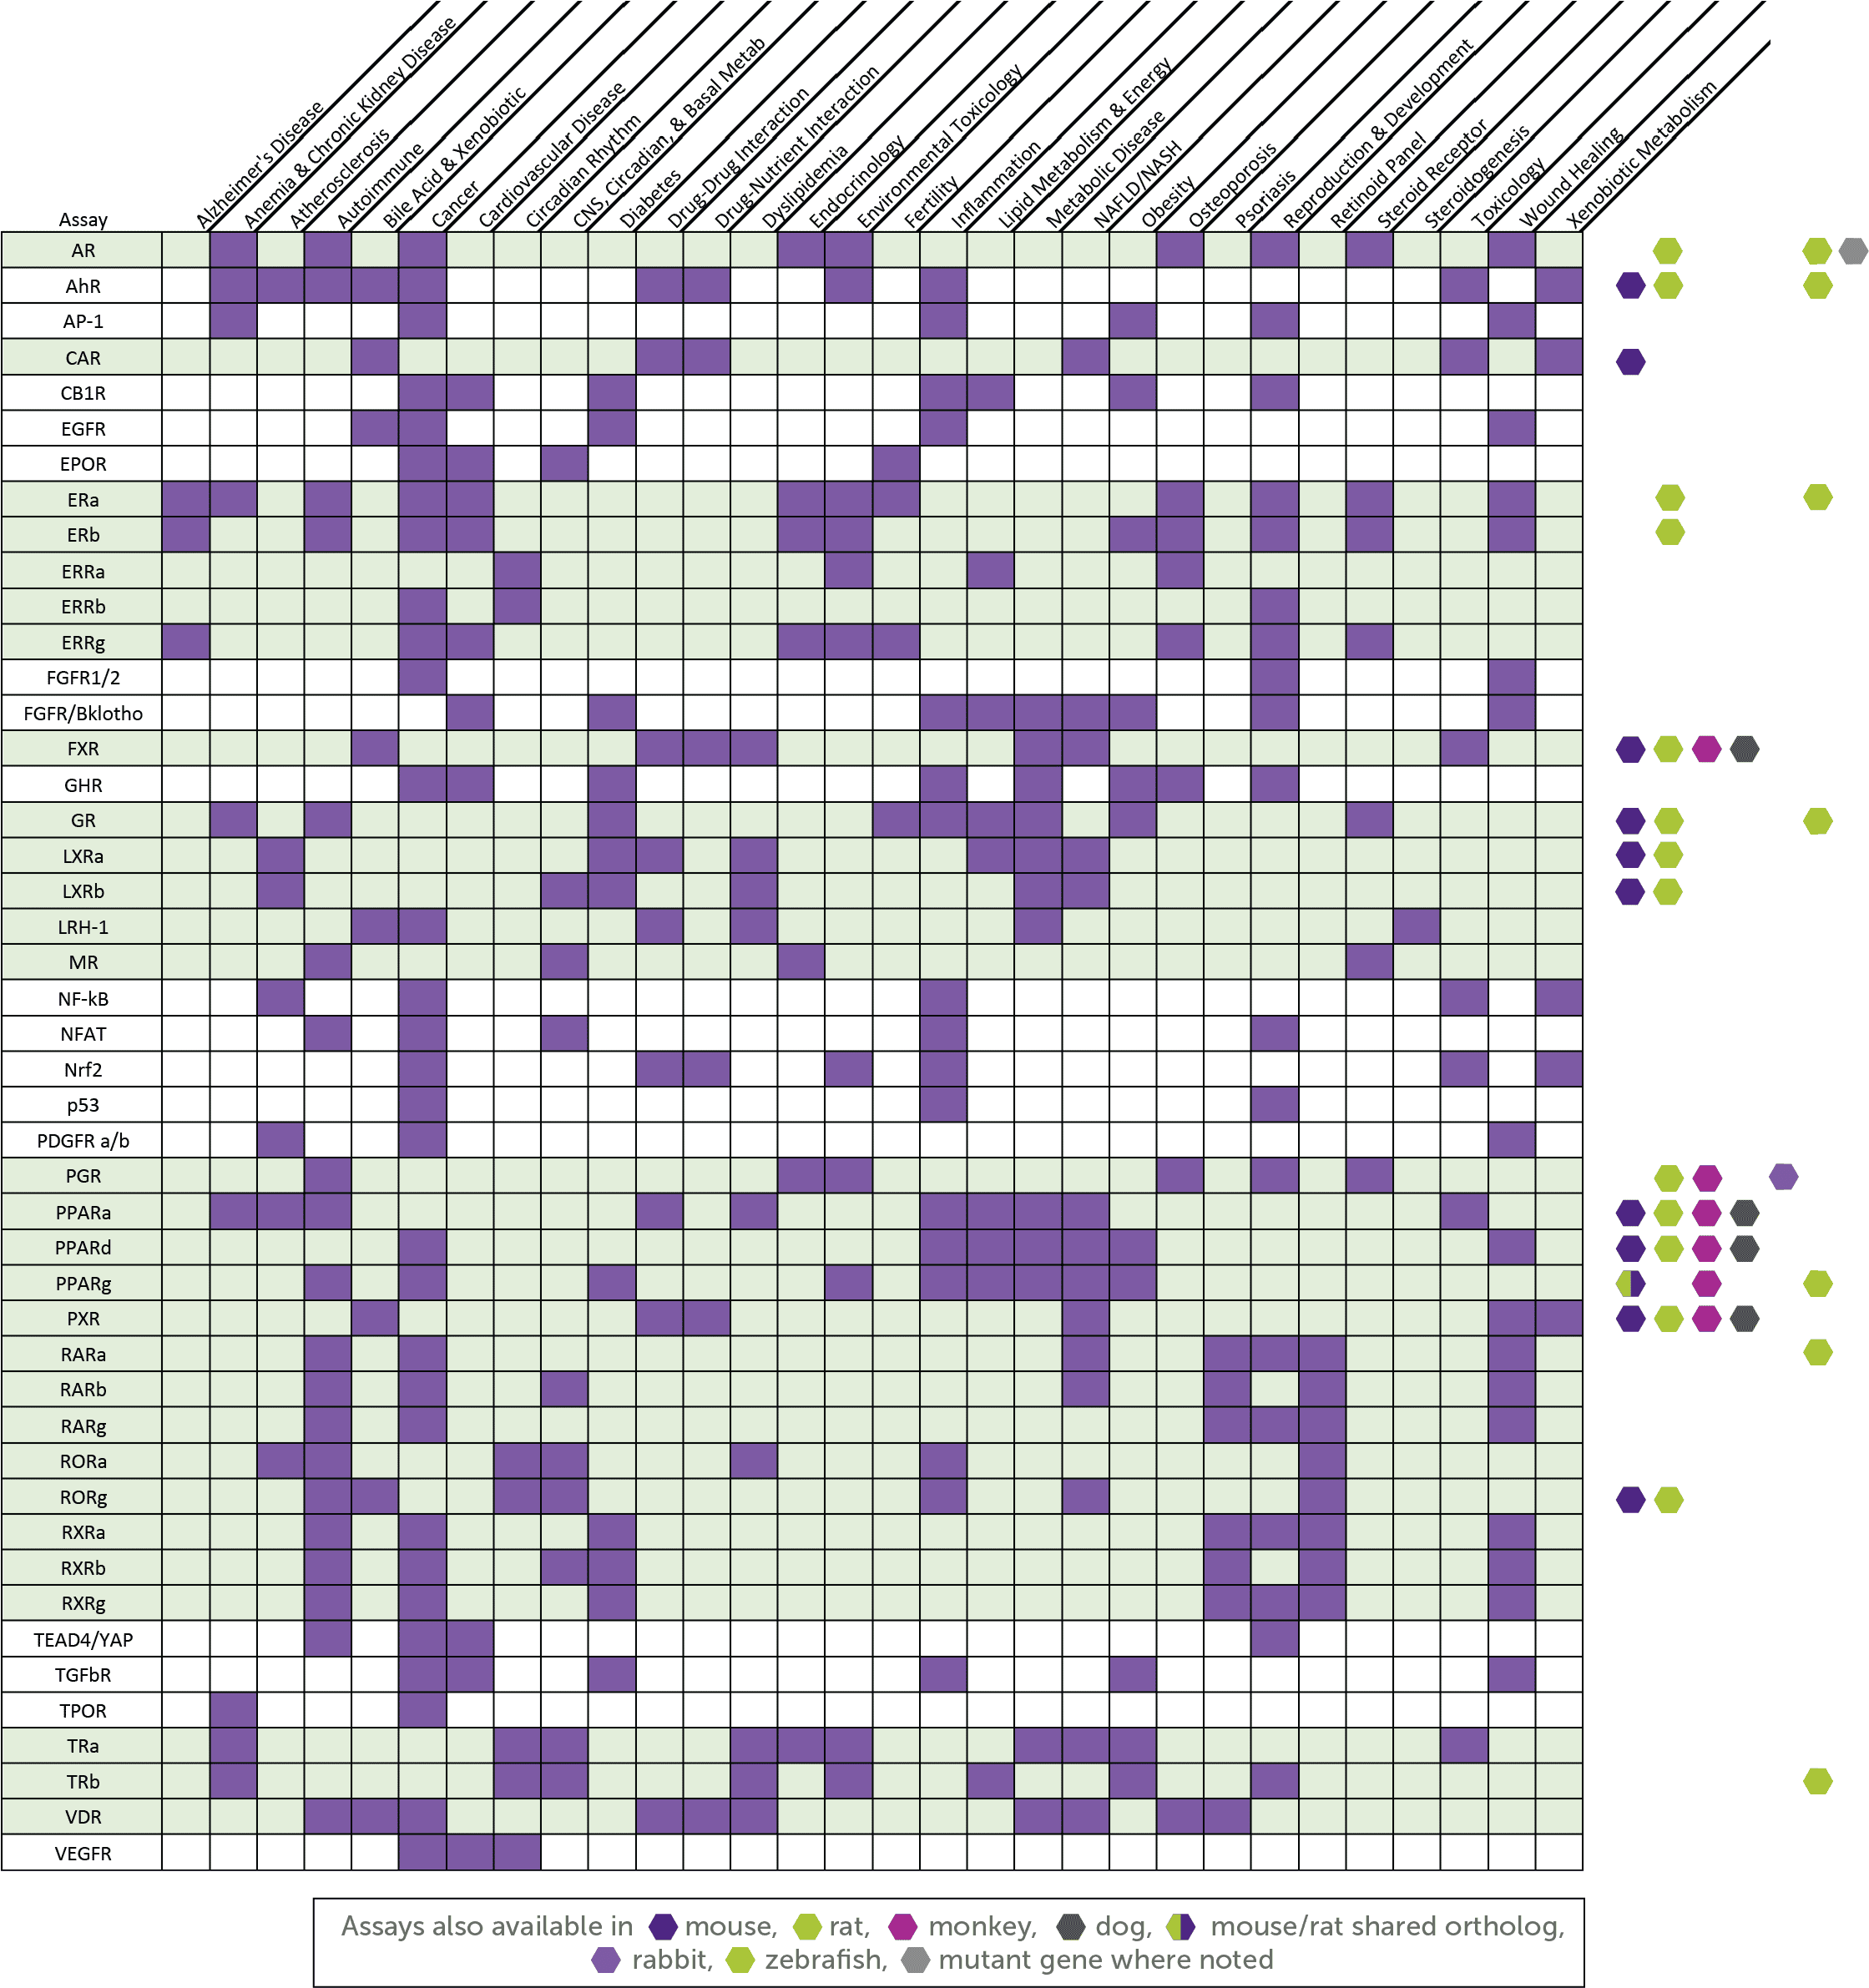 INDIGO's Disease State Chart